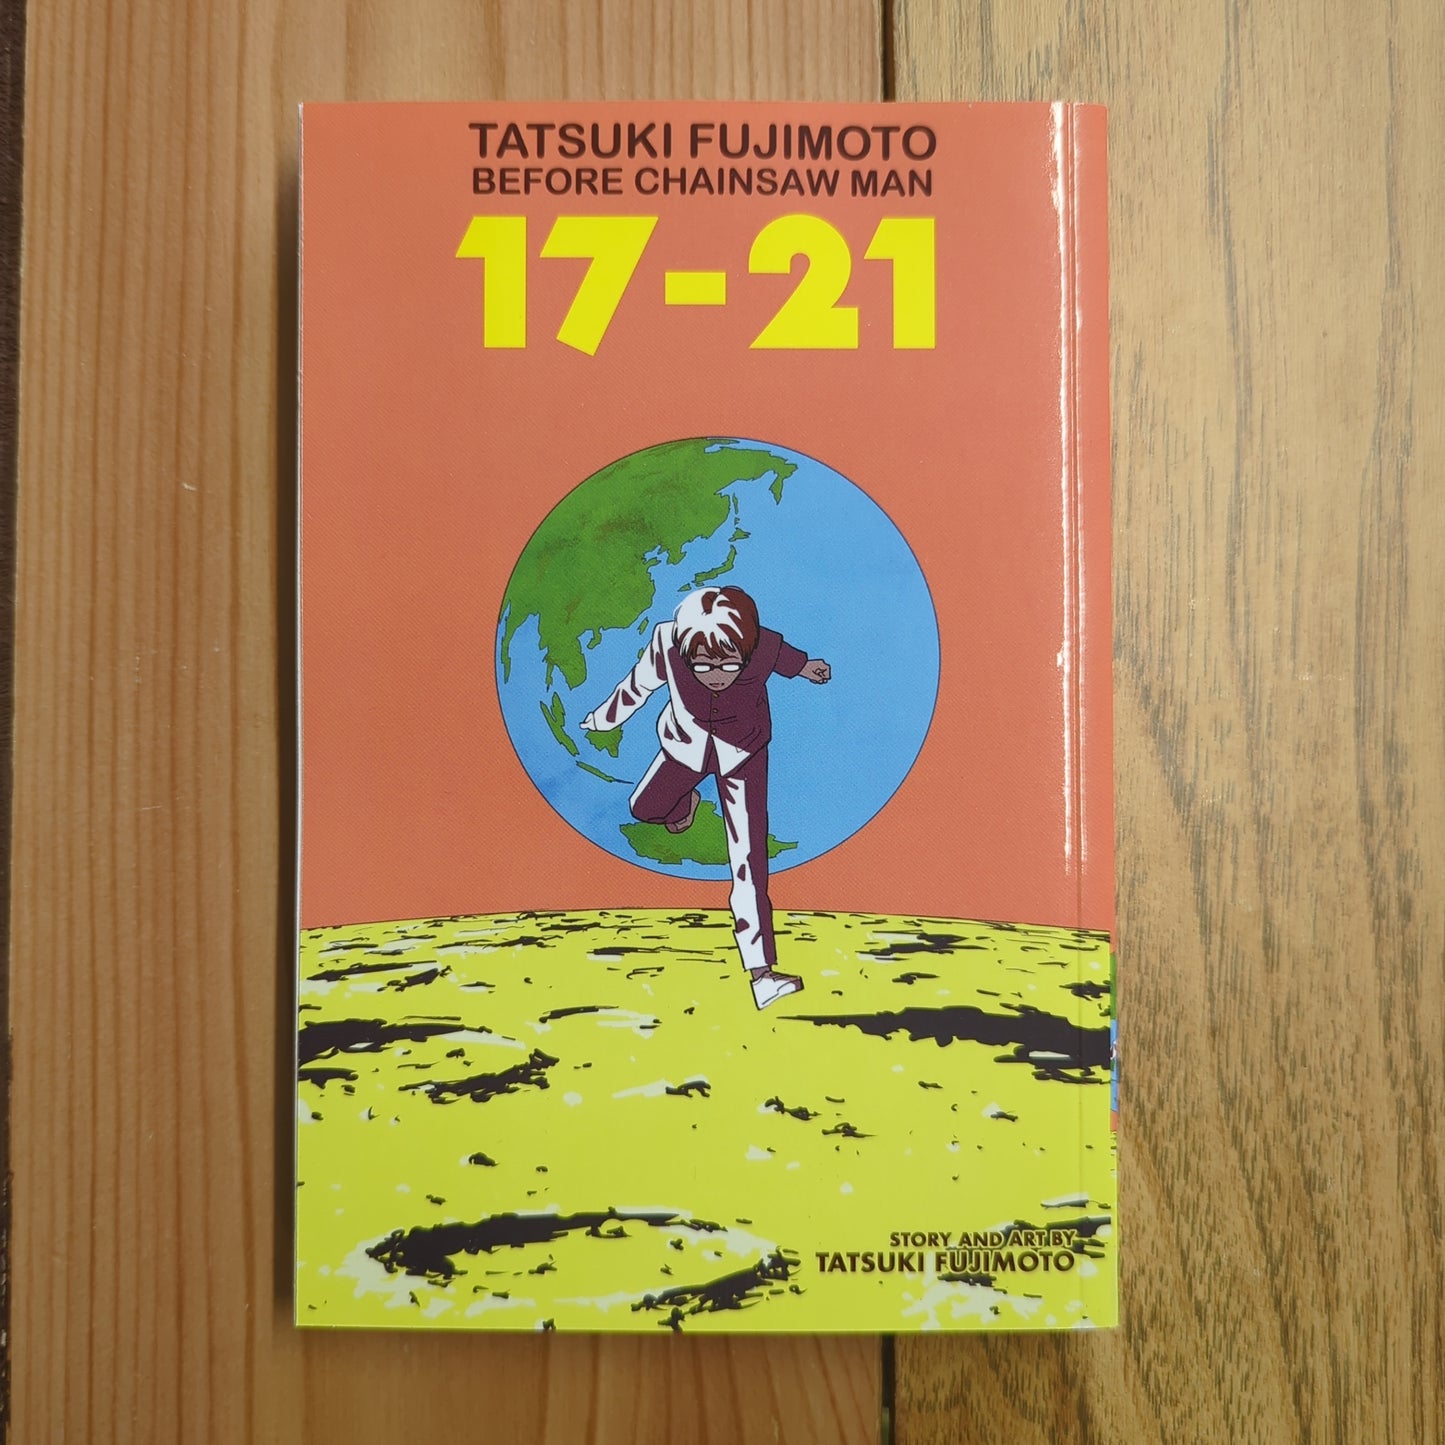 Tatsuki Fujimoto Before Chainsaw Man: 17-21